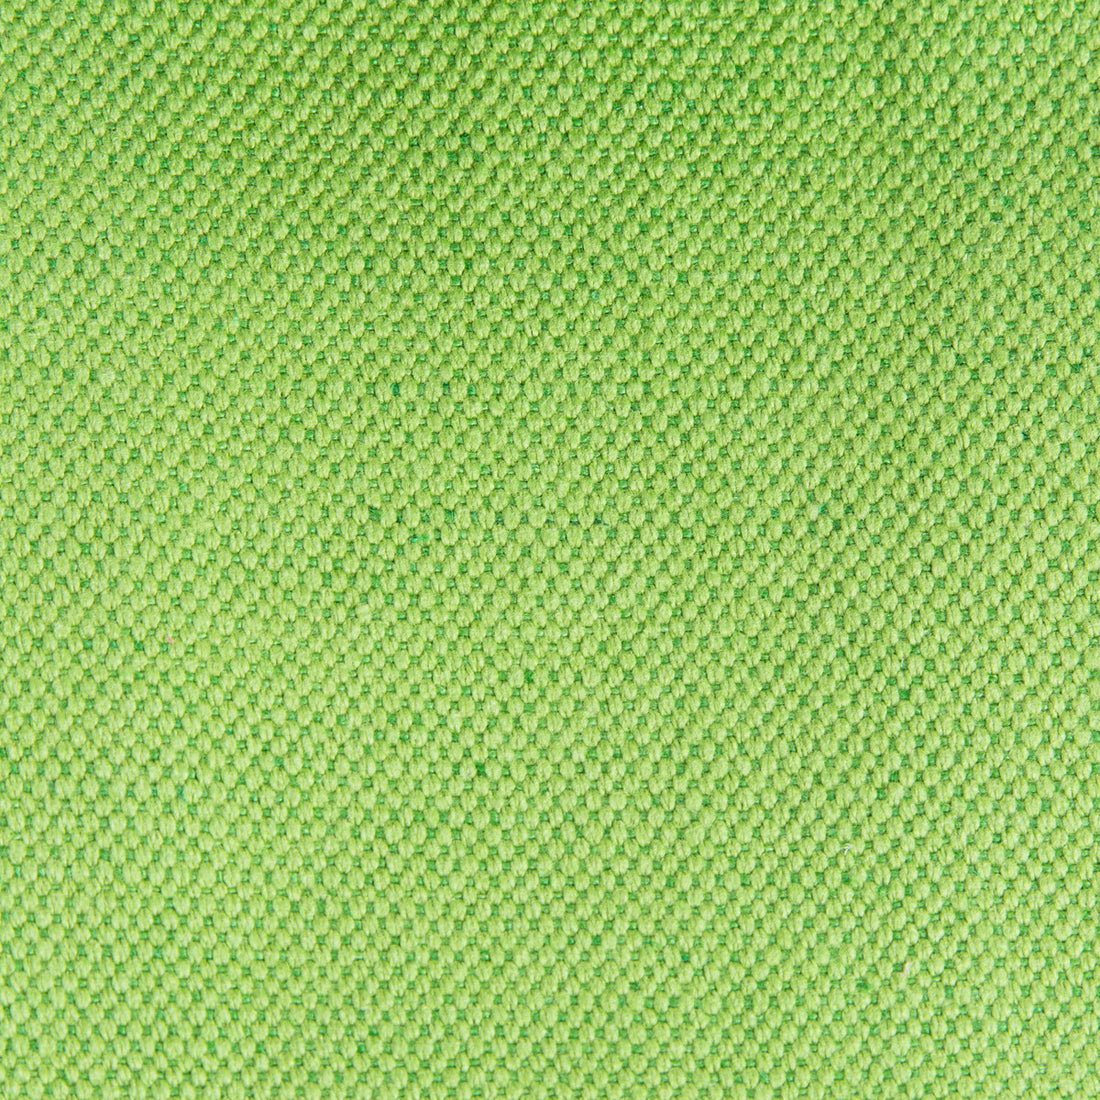 Lima fabric in verde claro color - pattern GDT5616.010.0 - by Gaston y Daniela in the Gaston Nuevo Mundo collection